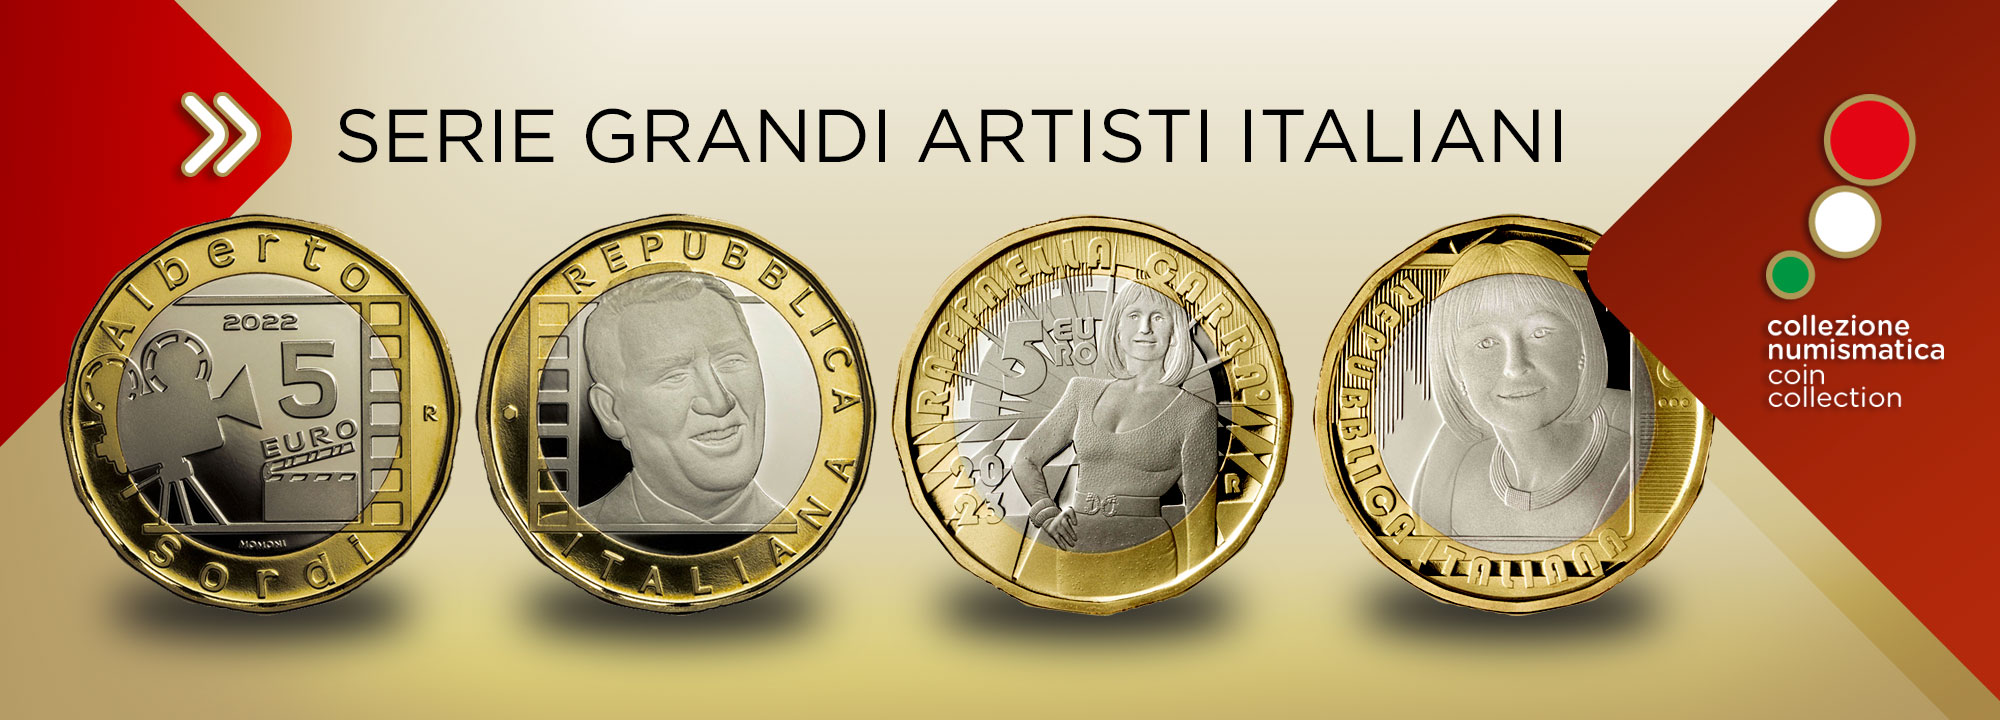 Monete - Serie Grandi Artisti Italiani